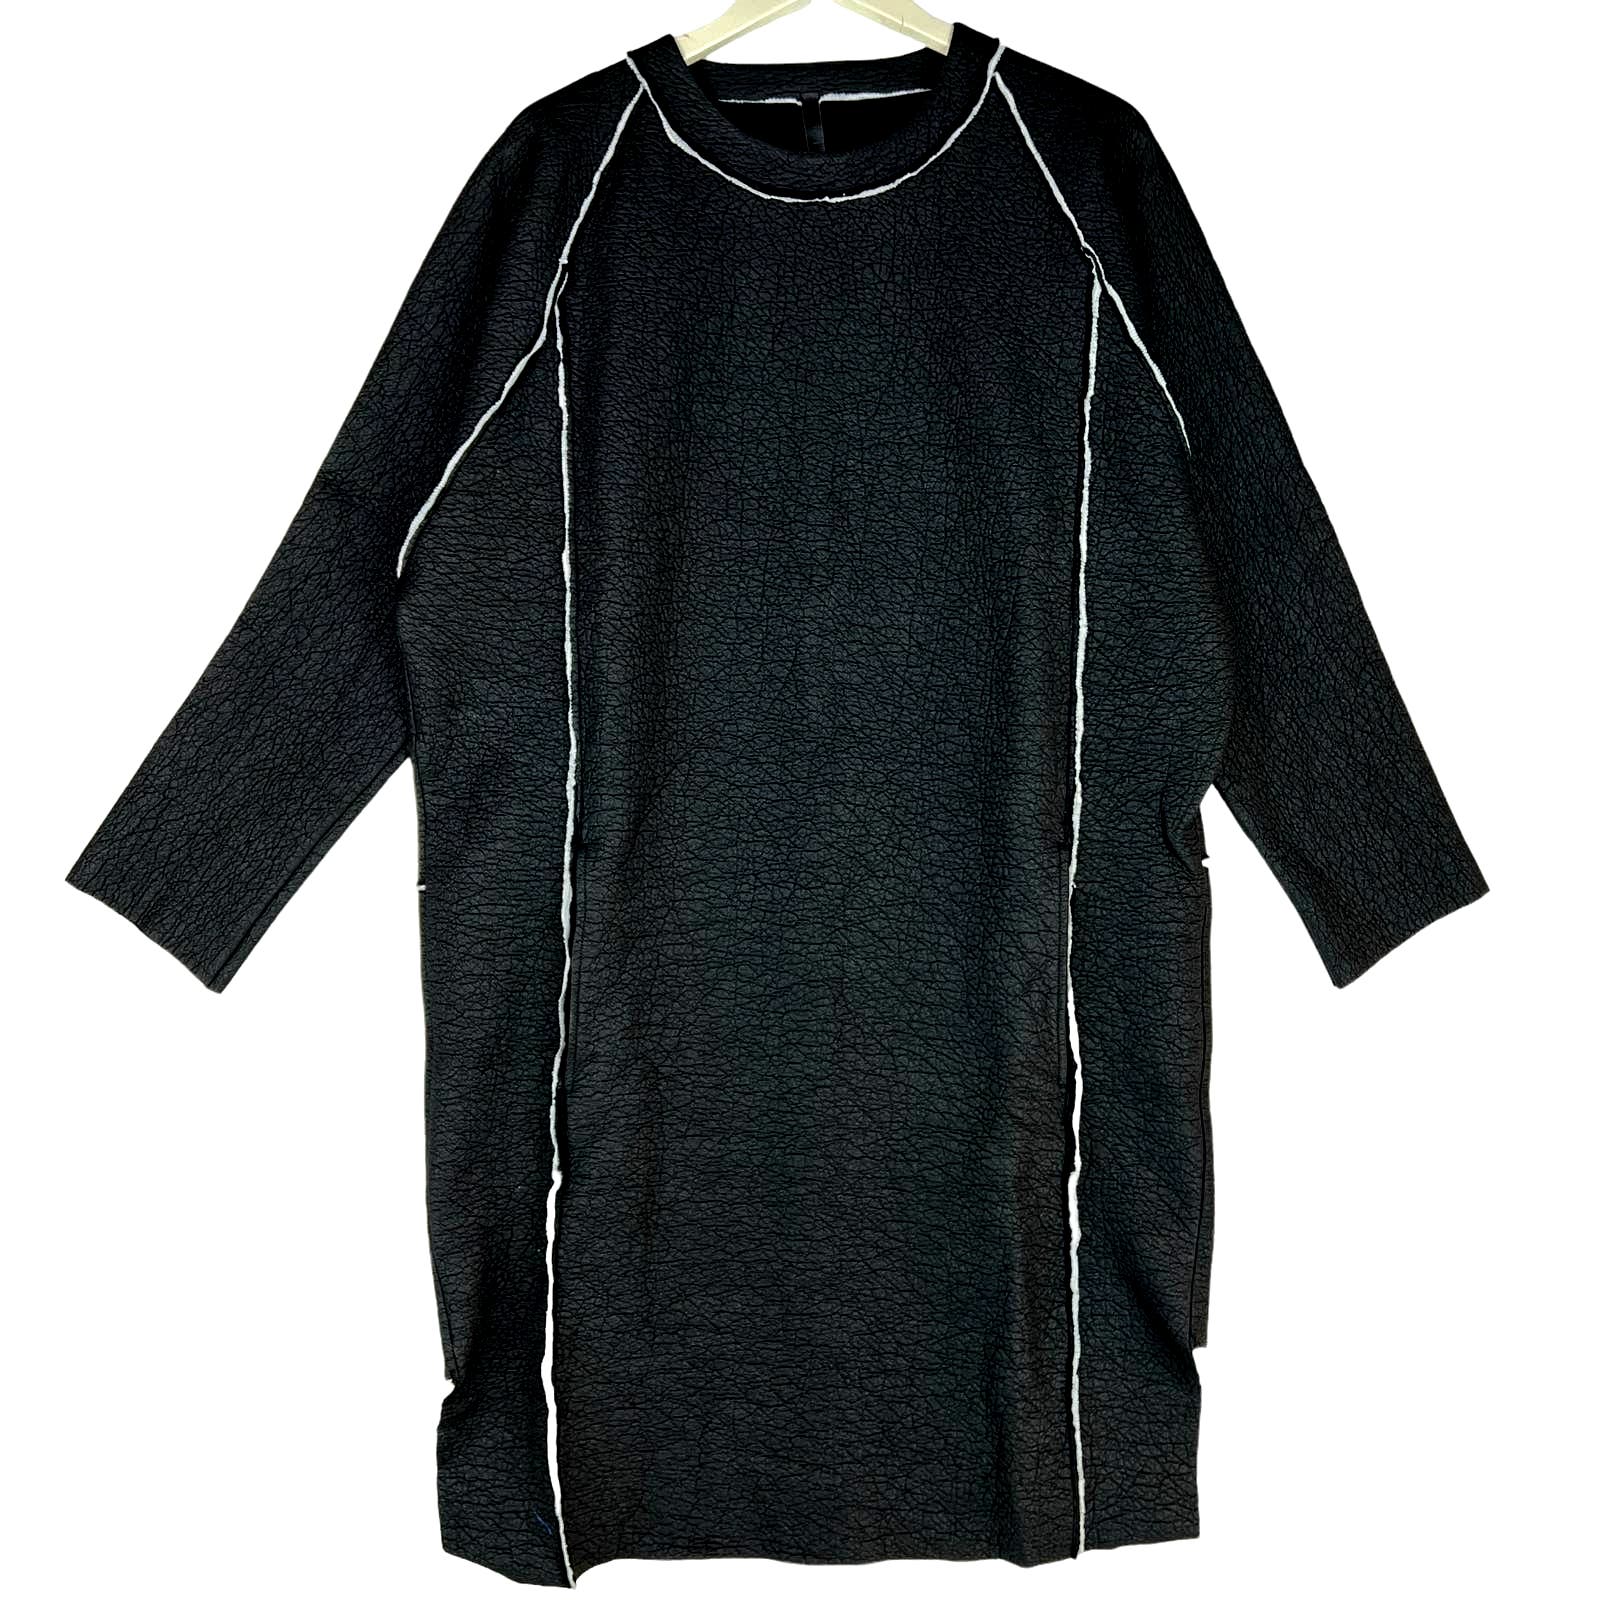 Barbara I Gongini Women Black Tunic Dress Size 1 Leather Print 100% Cotton